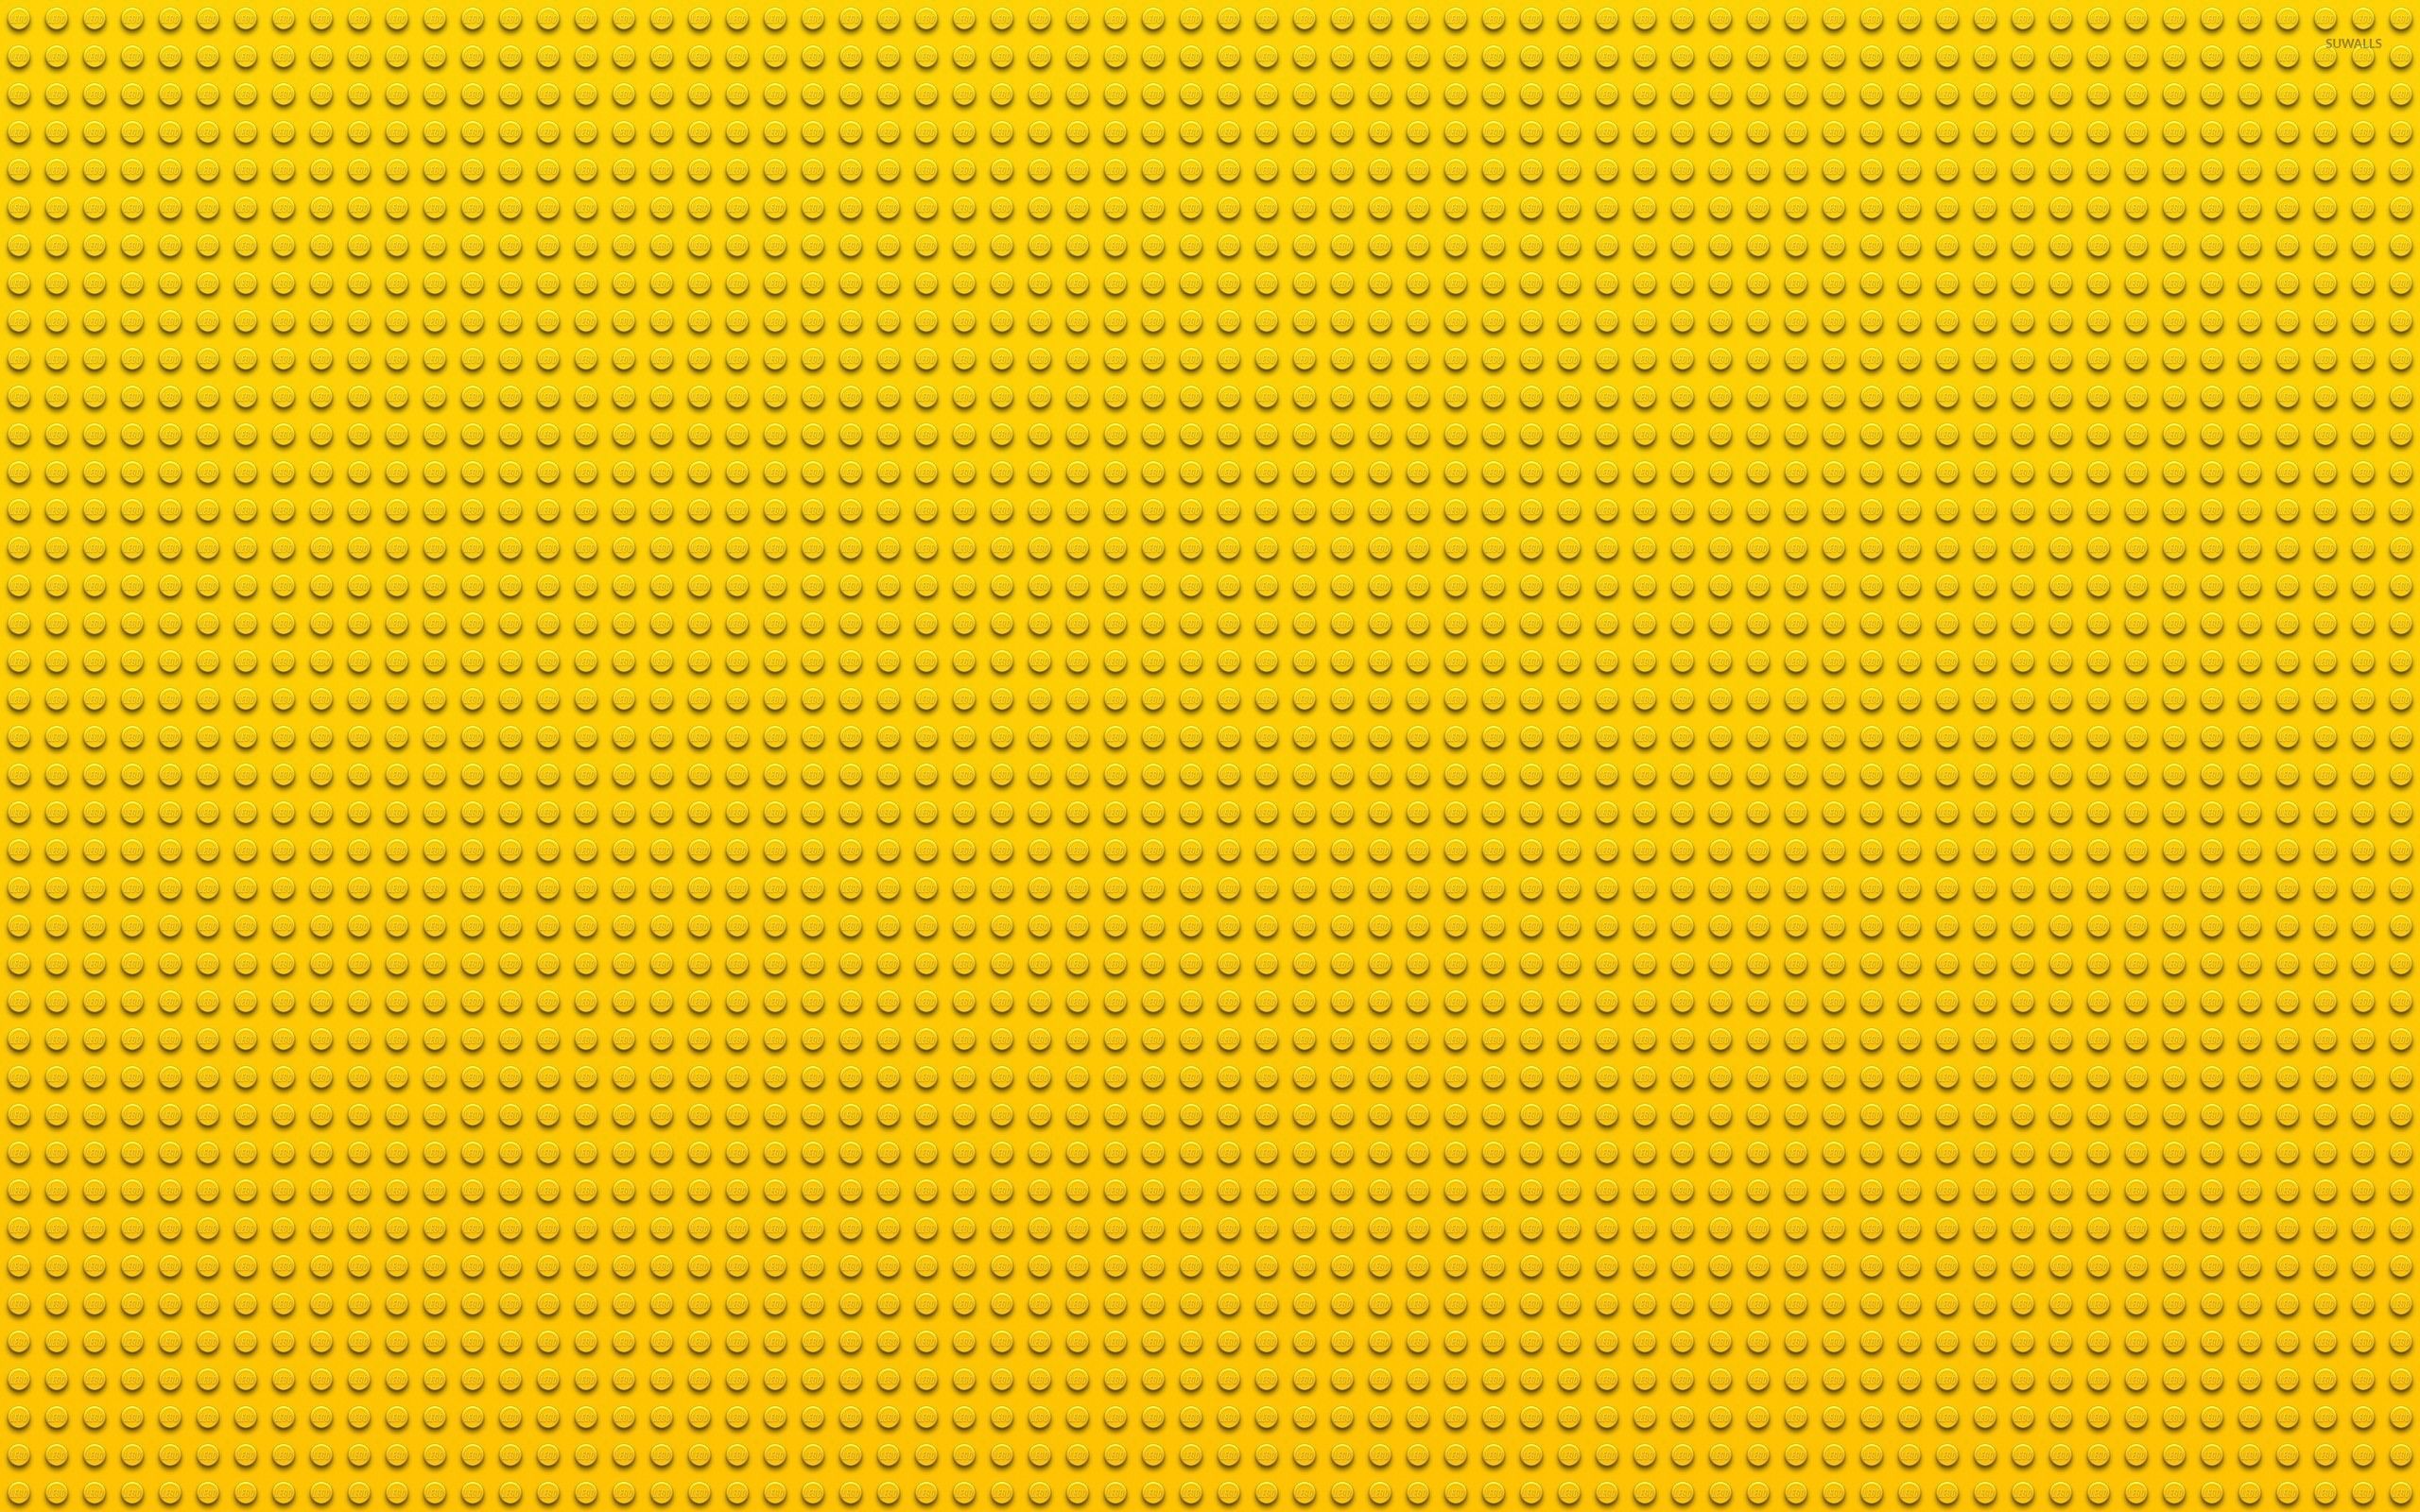 LEGO Wallpaper Free LEGO Background